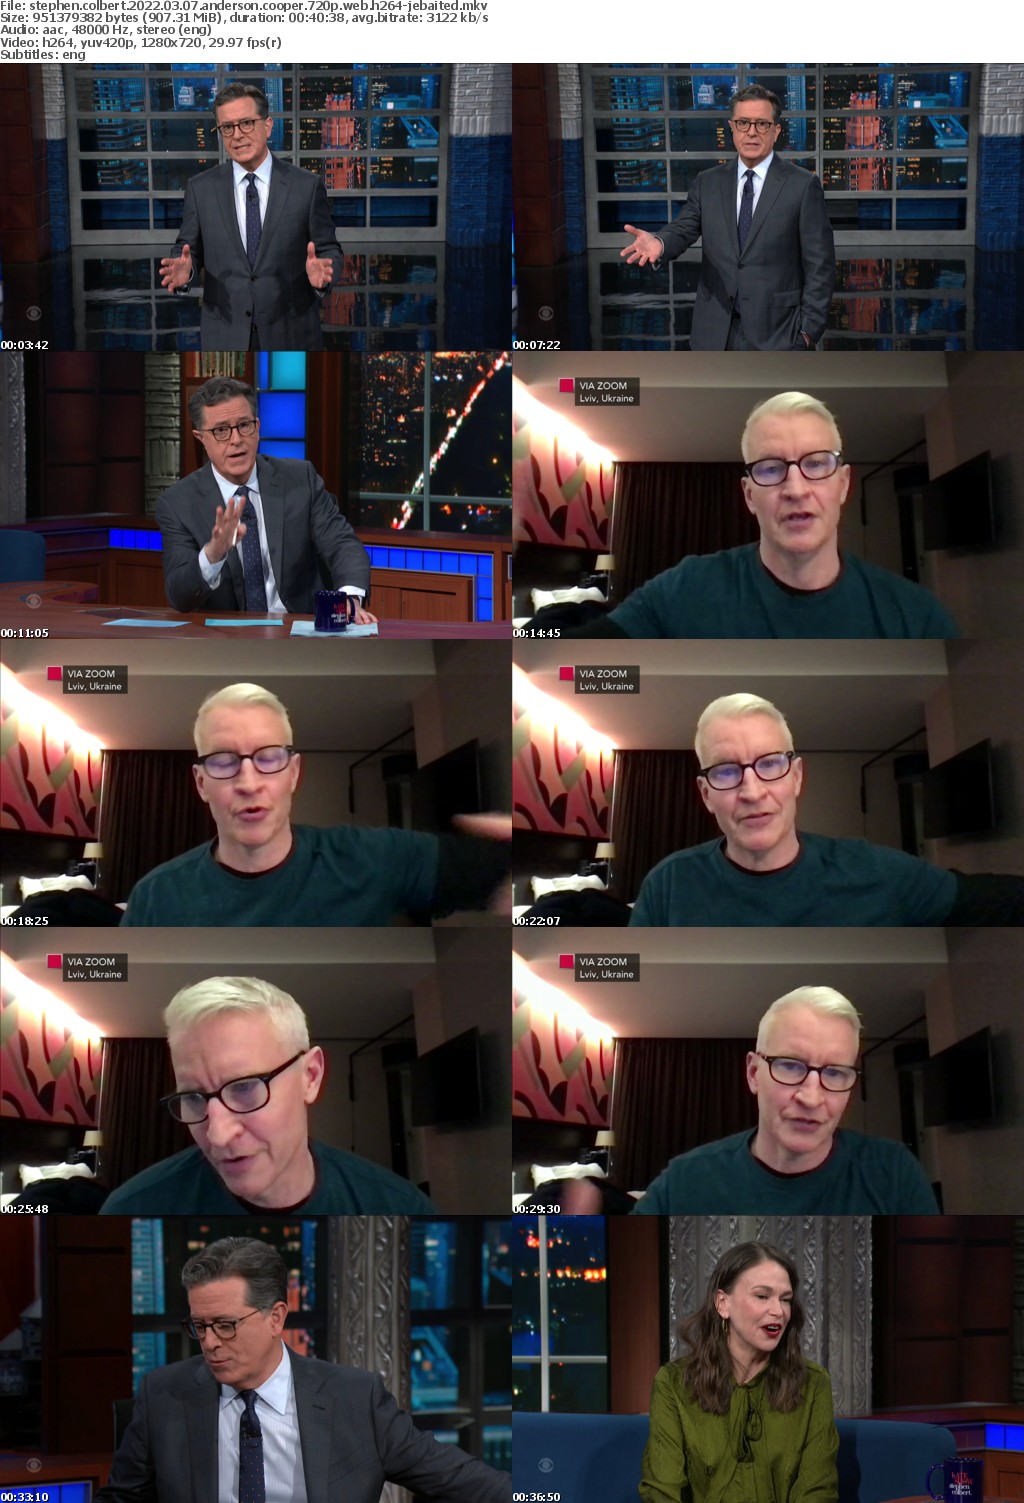 Stephen Colbert 2022 03 07 Anderson Cooper 720p WEB H264-JEBAITED